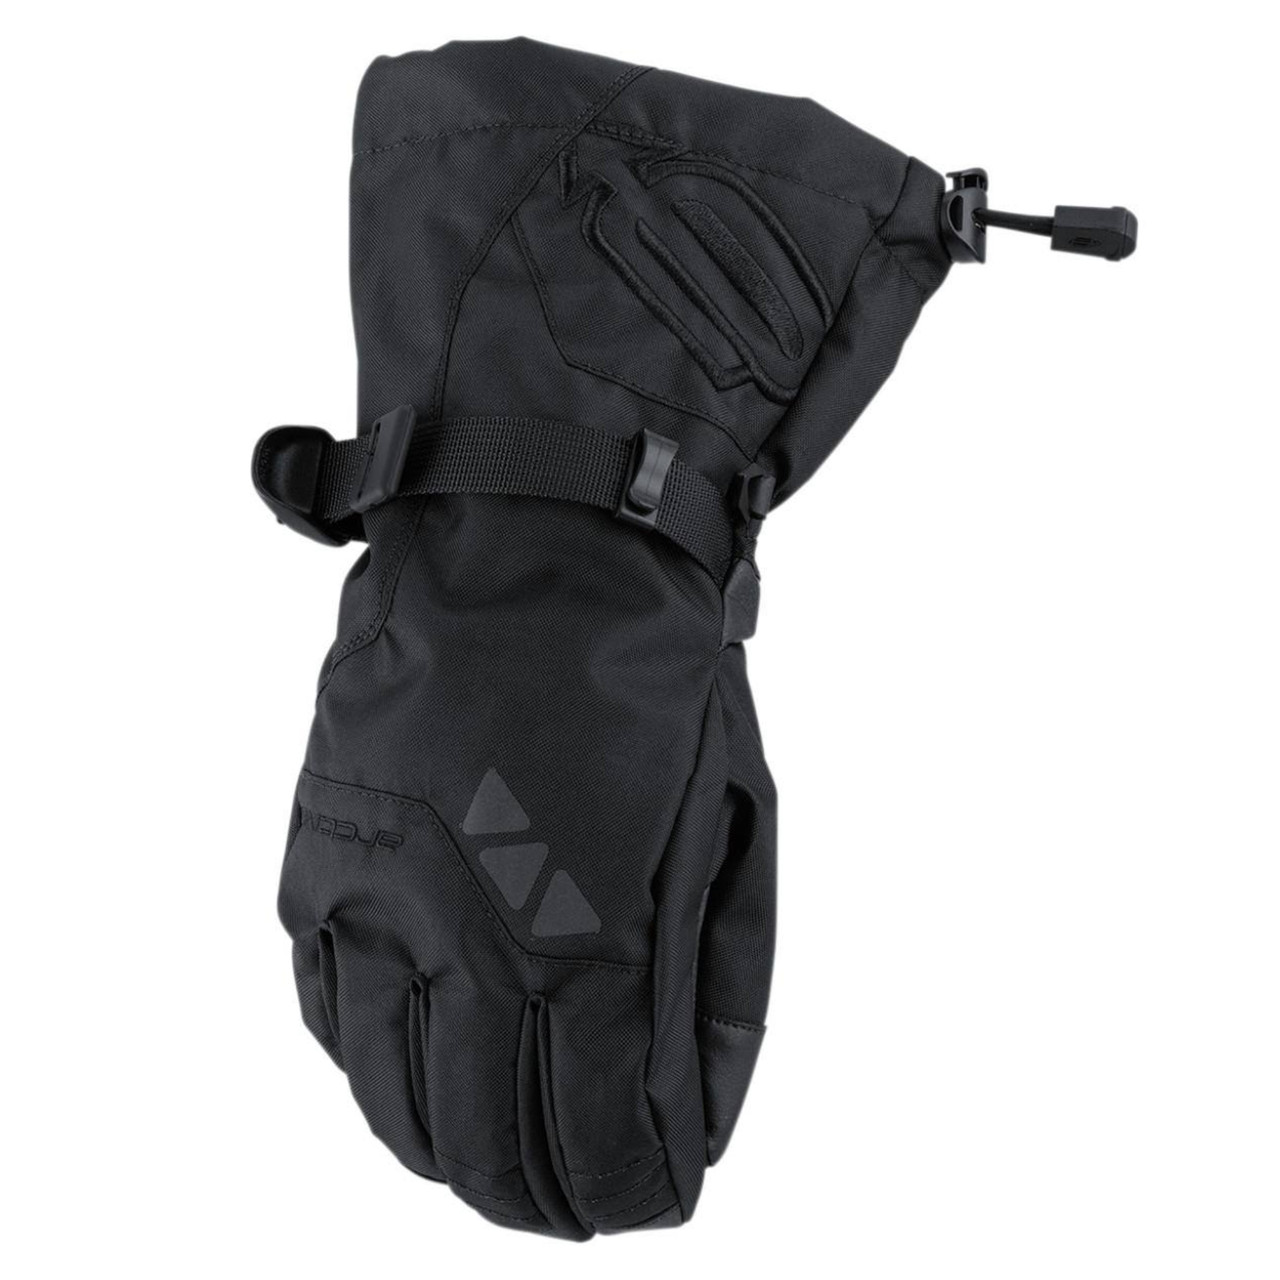 Arctiva New 2X-Large Black S20 Pivot Gloves, 33401319